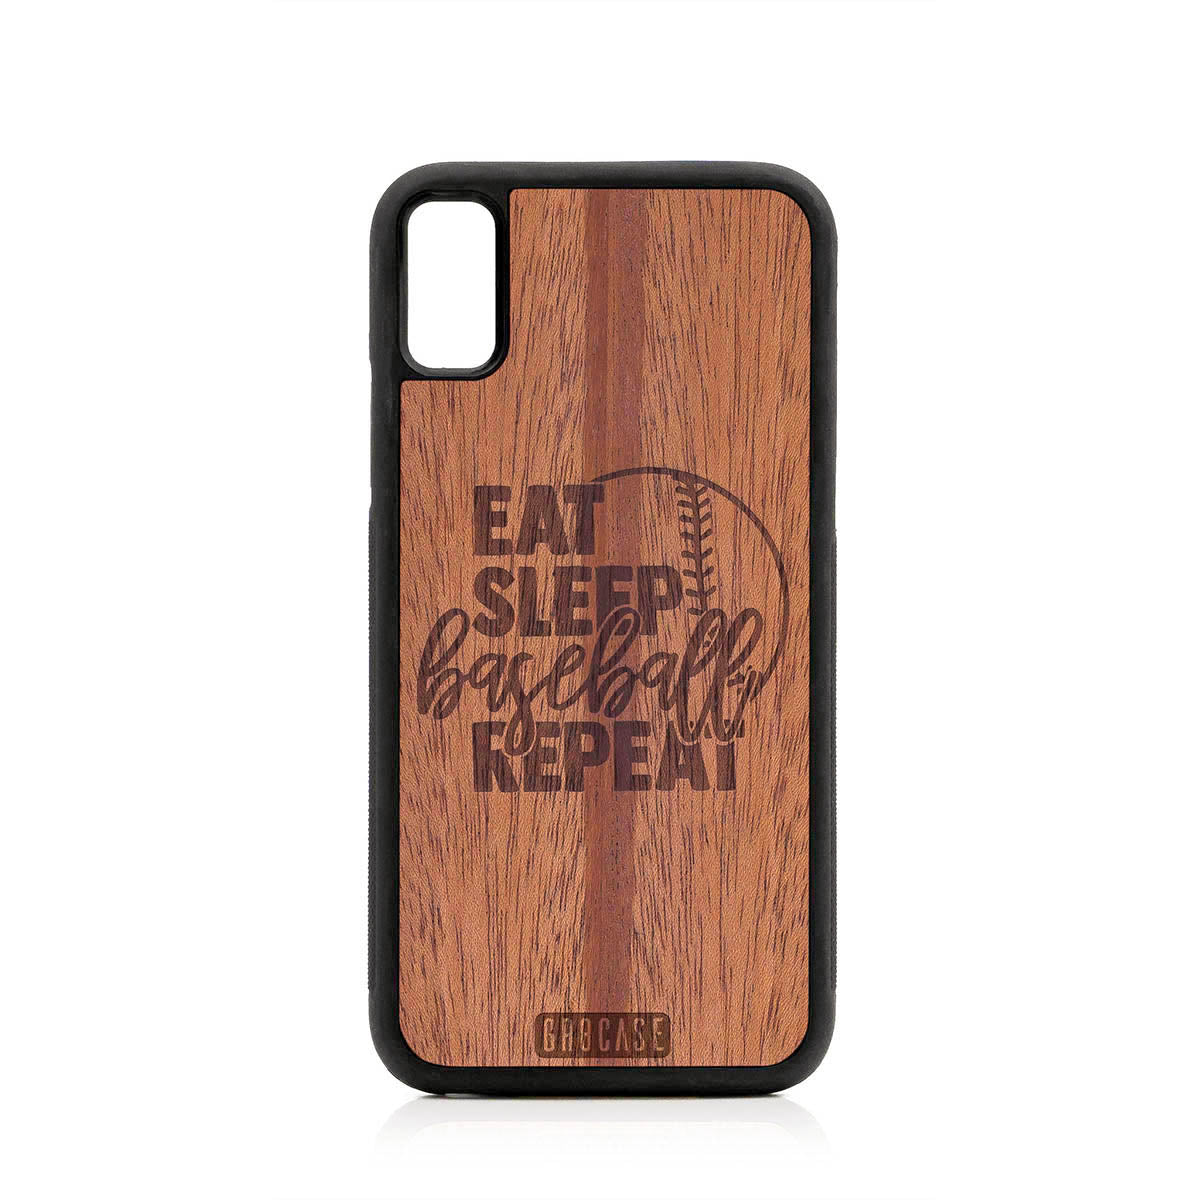 Eat Sleep Baseball Repeat Design Wood Case For iPhone X/XS